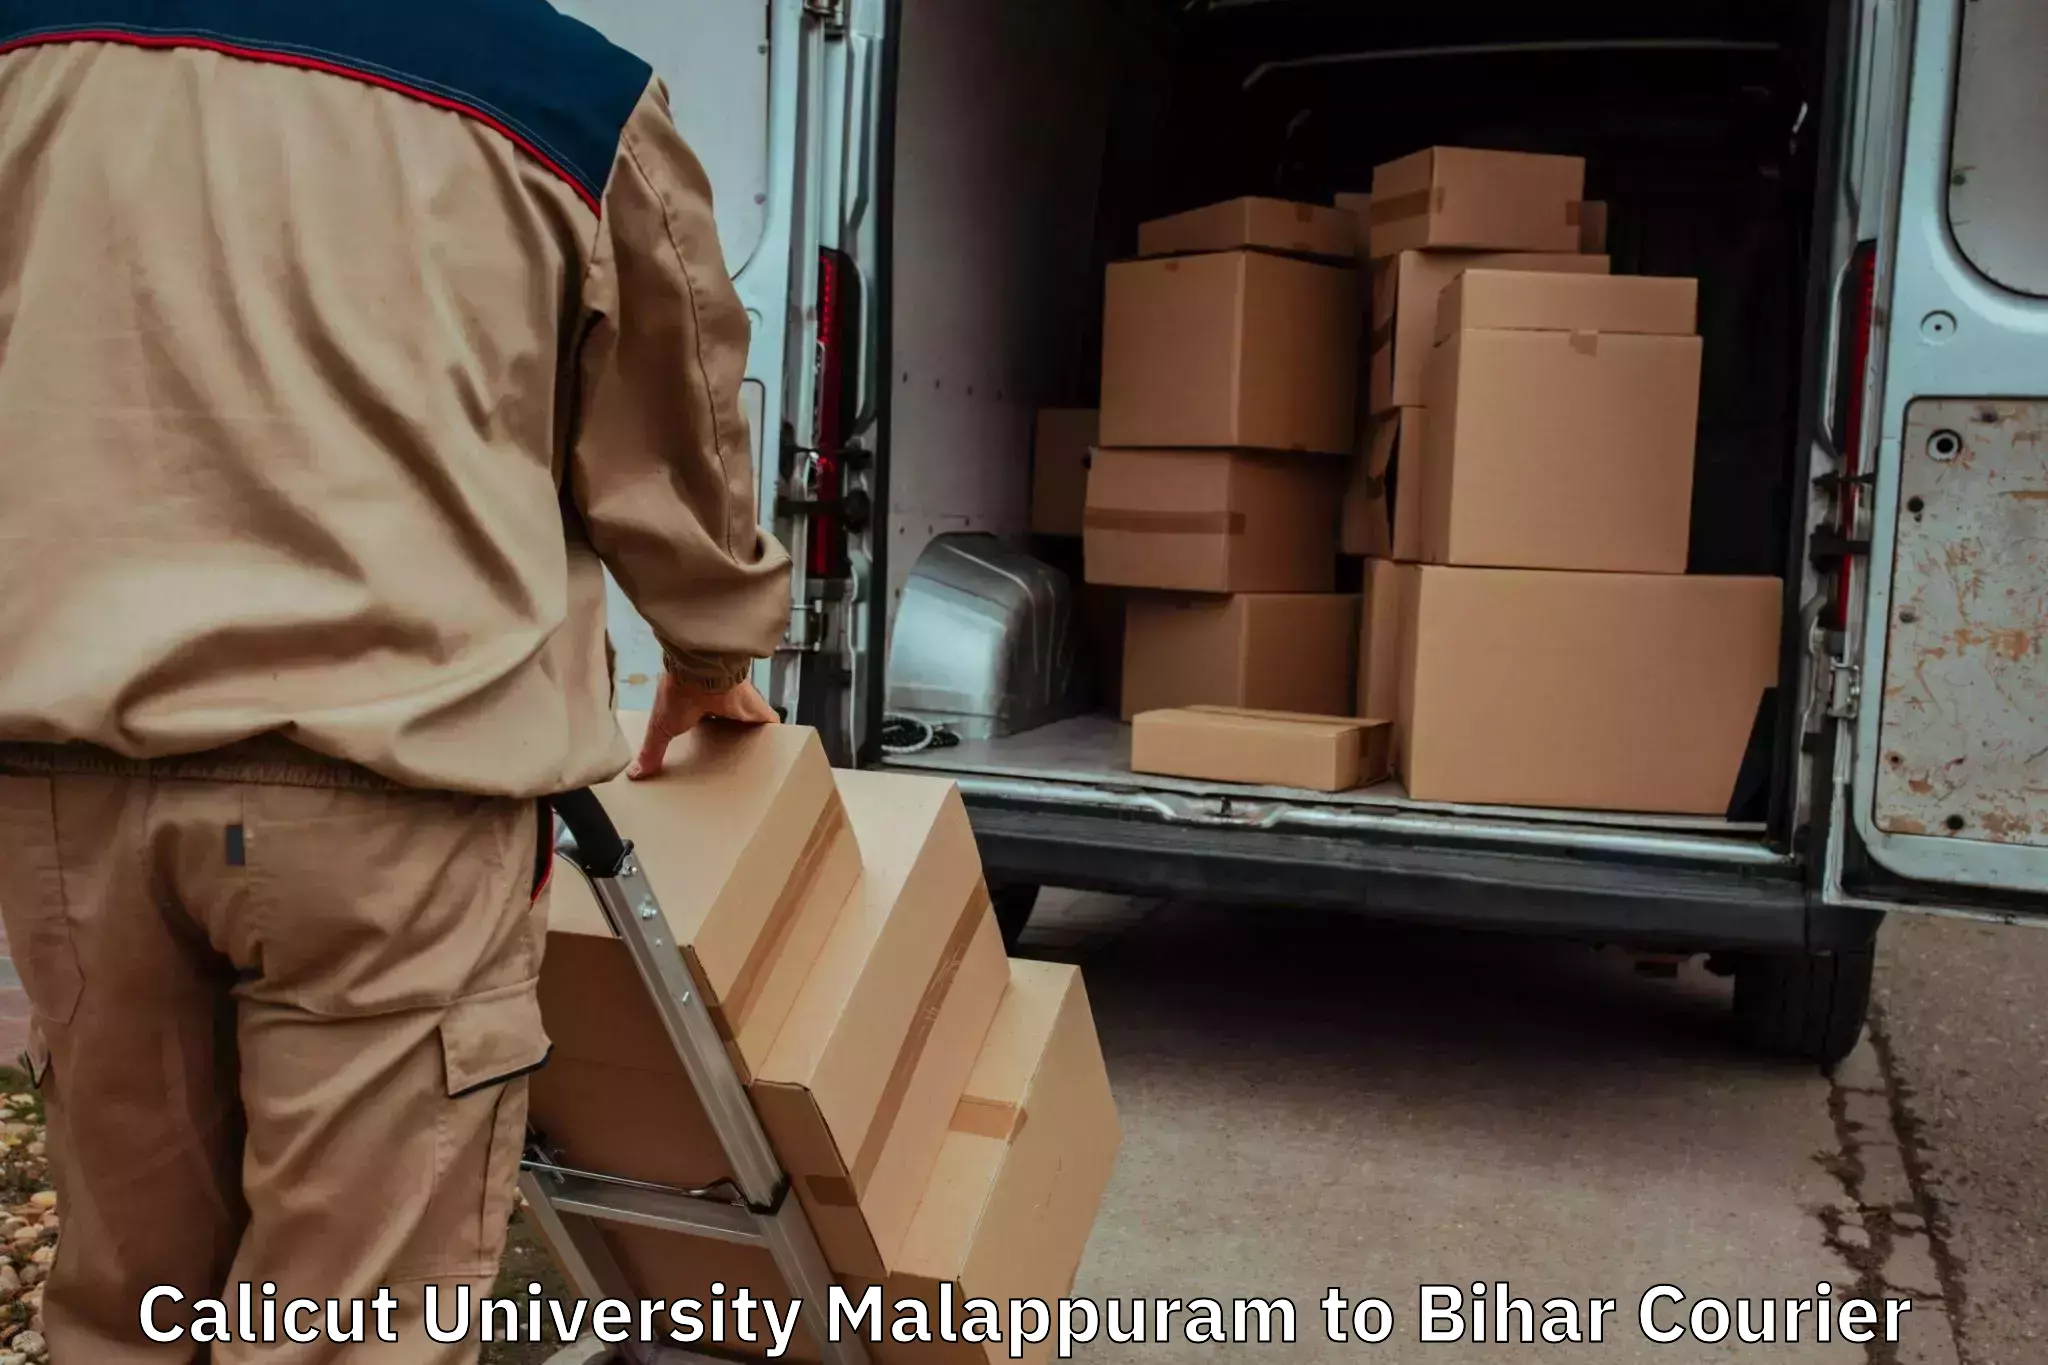 Professional moving company Calicut University Malappuram to Jiwdhara